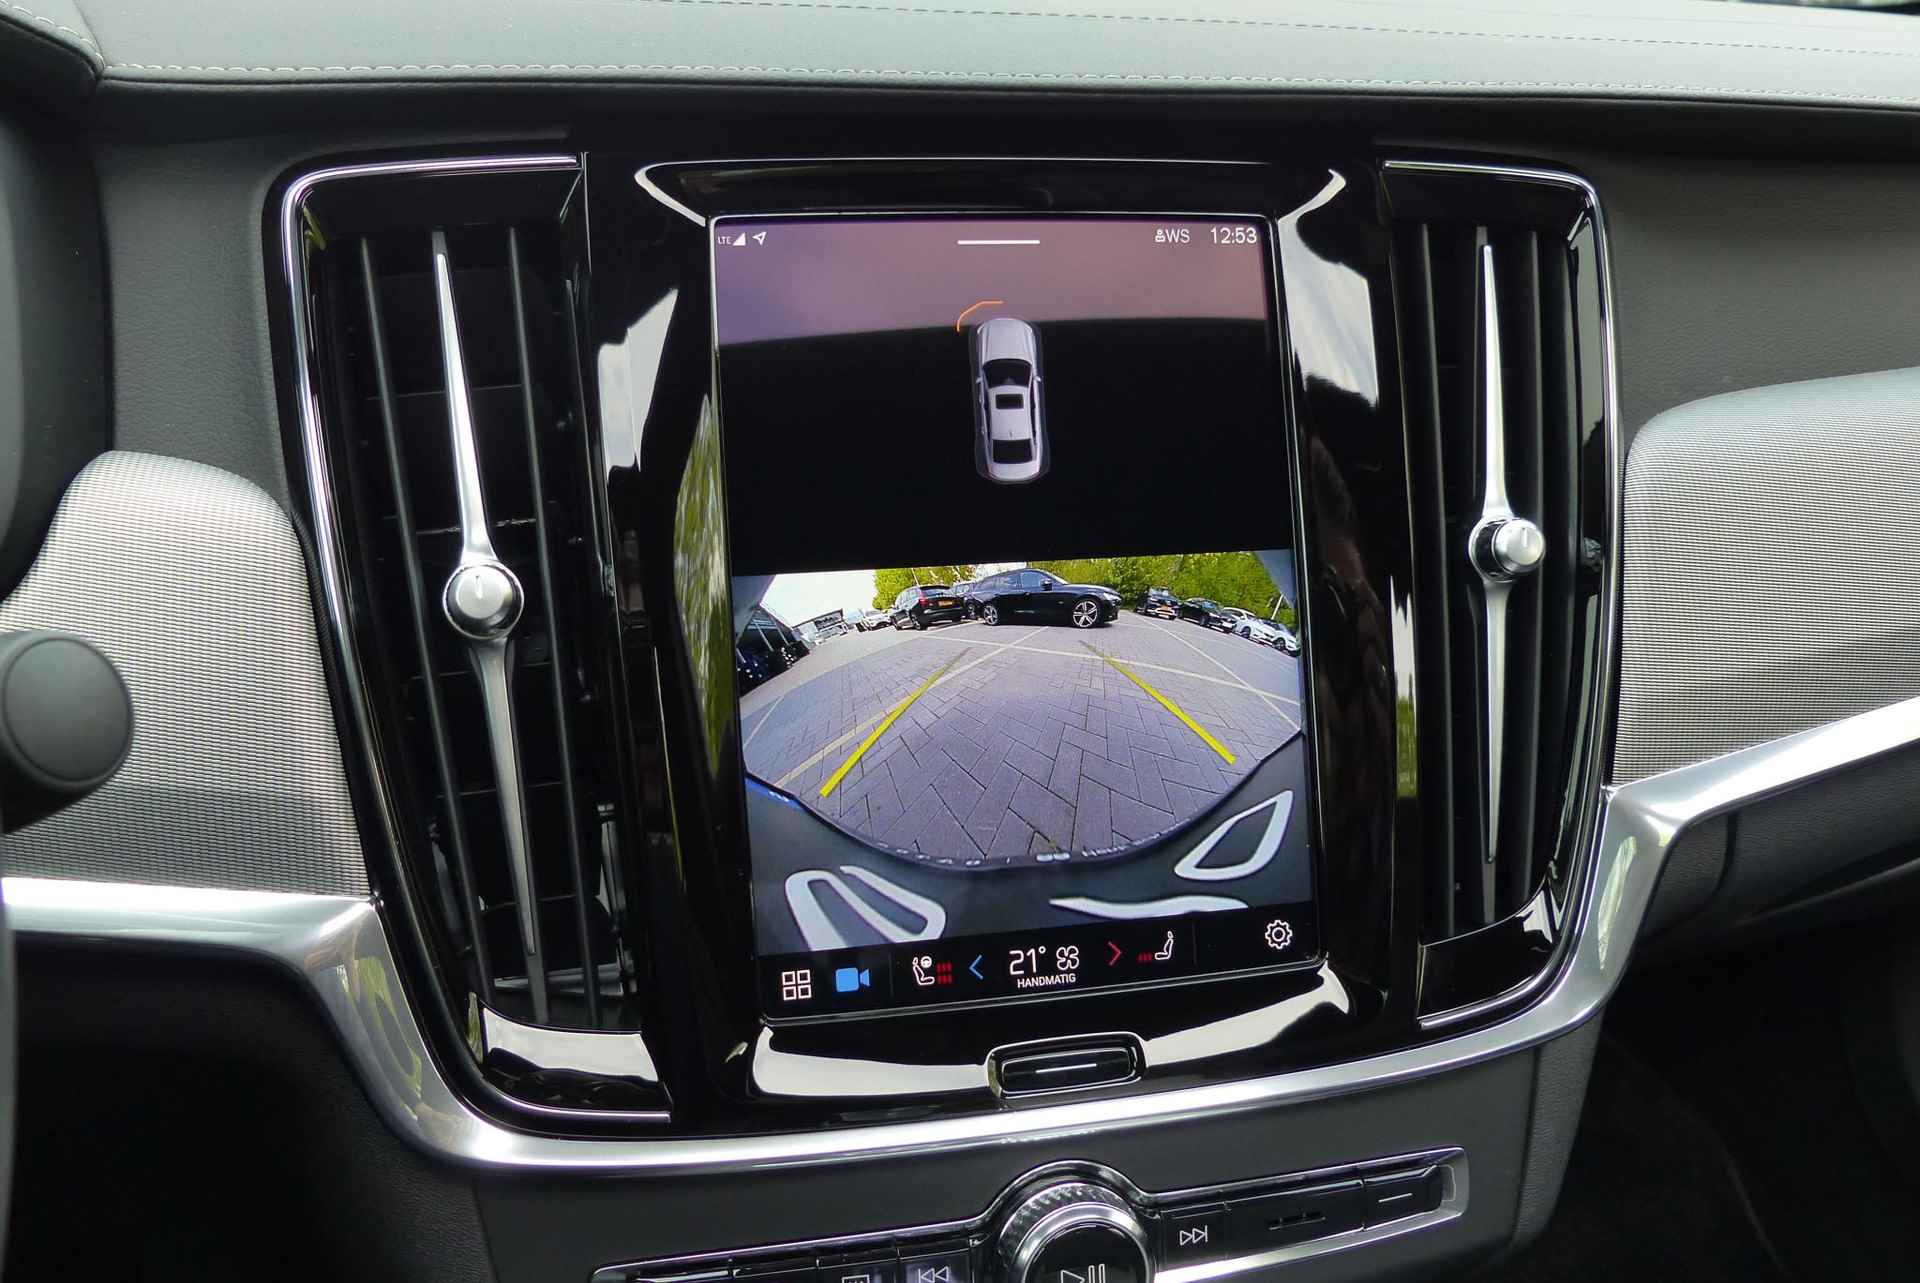 Volvo S90 B5 250PK AUT8 Ultimate Dark Adaptieve Cruise Control met Pilot Assist, Elektrisch bedienbaar panoramisch schuif-/kanteldak, Premium audio by Harman Kardon, Elektrisch bedienbare voorstoelen, Verwarmbare voorstoelen + stuurwiel, Verwarmbare achterbank, Park Assist voor + achter, Parkeercamera, 360° camera, Head-Up display, Blind Spot Information System, Keyless entree, 4-Zone Climate Control, Apple CarPlay/Android Auto, 20'' Lichtmetalen wielen - 26/28